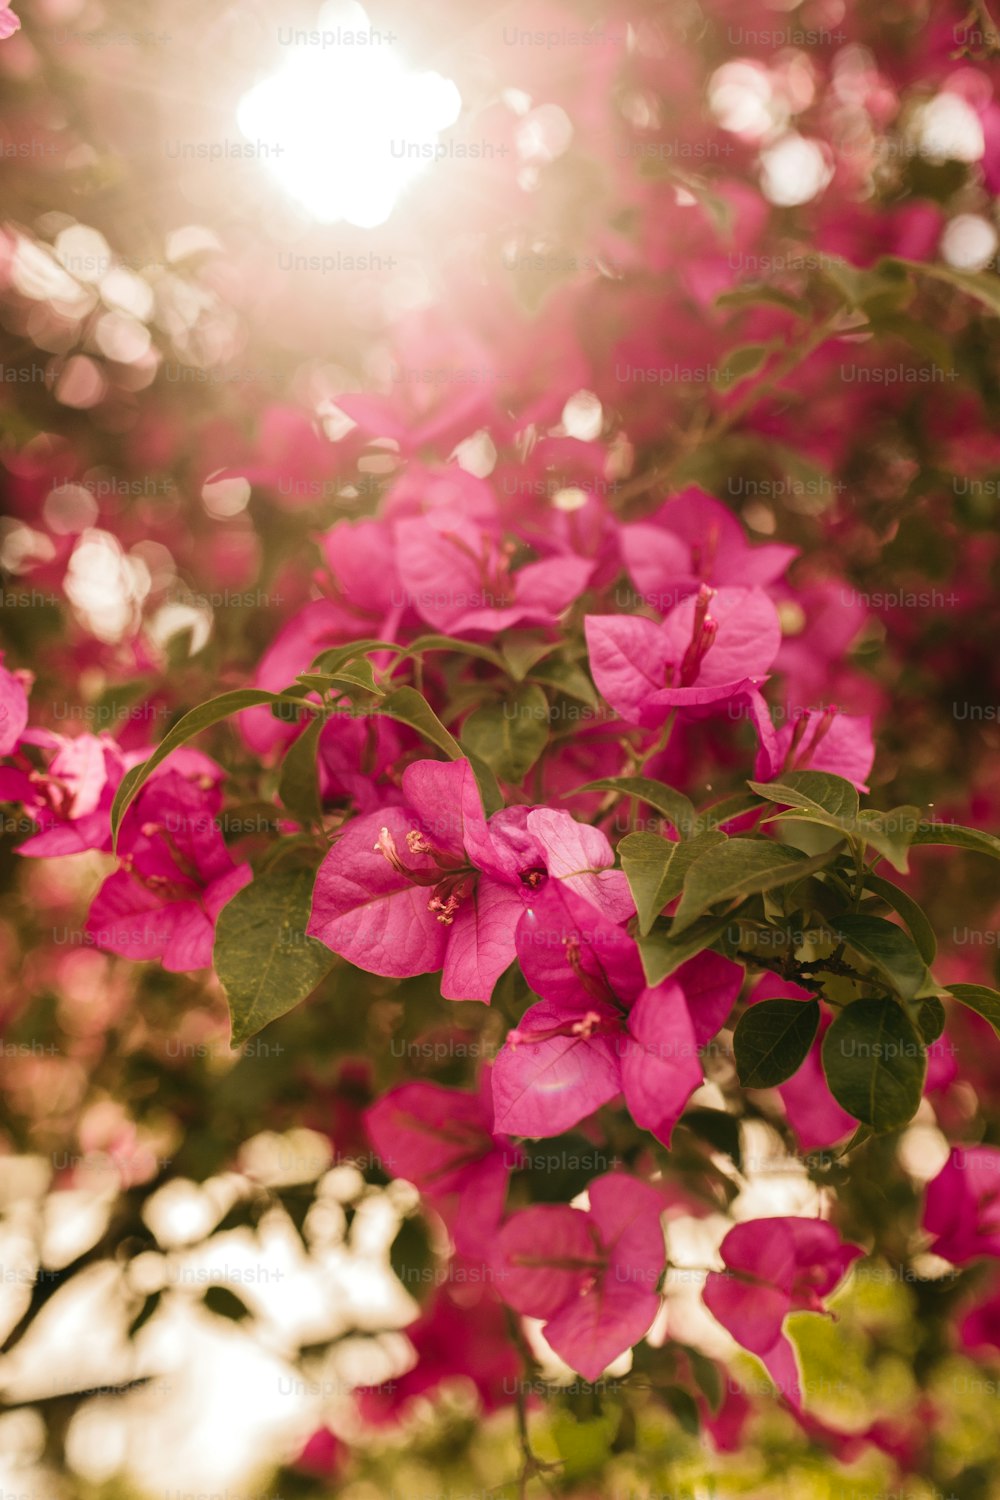 100+ Pink Flower Images | Download Free Pictures On Unsplash